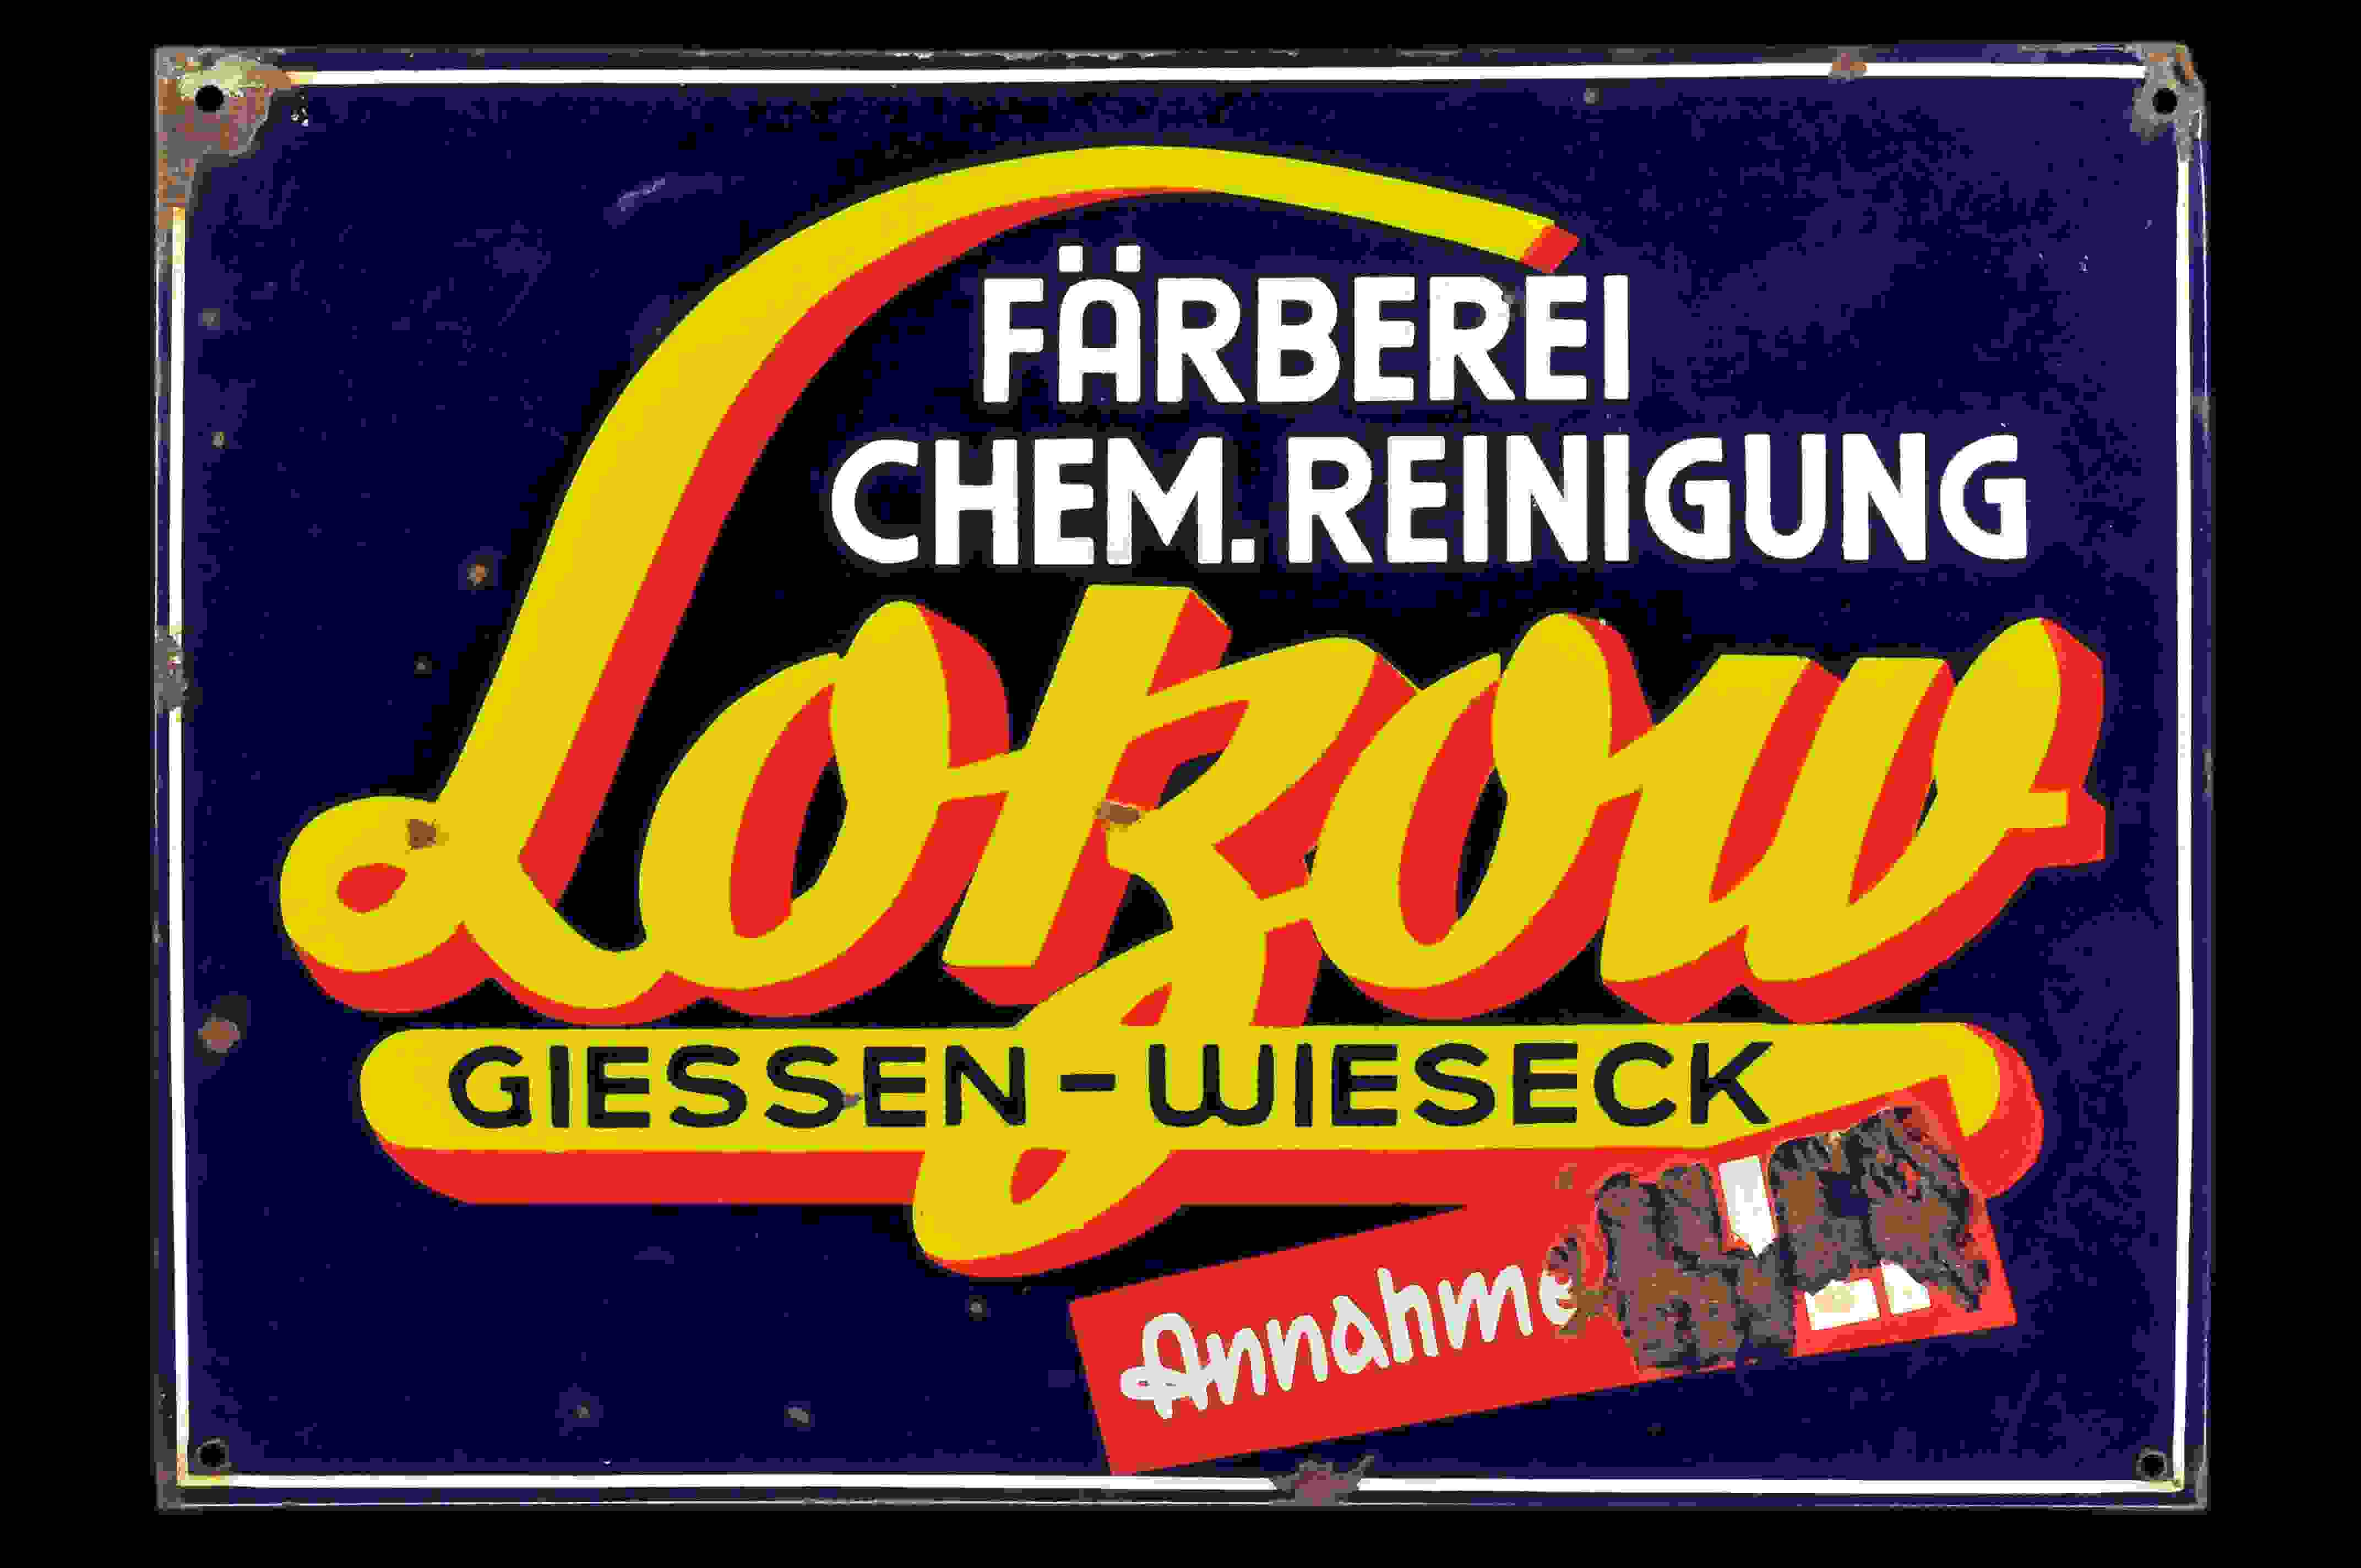 Lorzow Färberei 